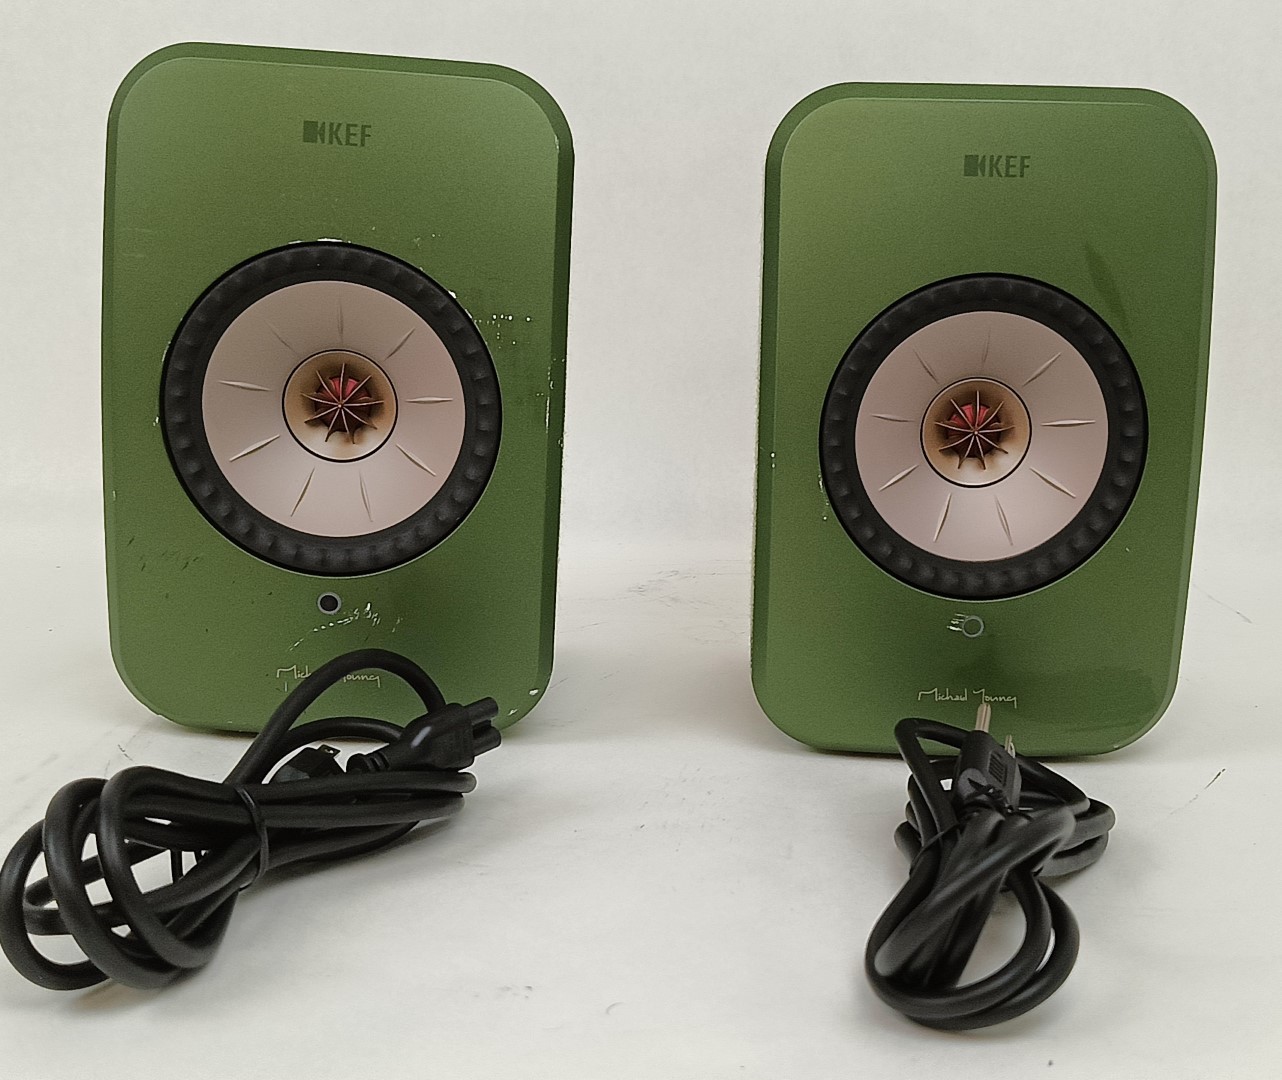 KEF LSXII Wireless Bookshelf Speakers (Pair) - Green - U